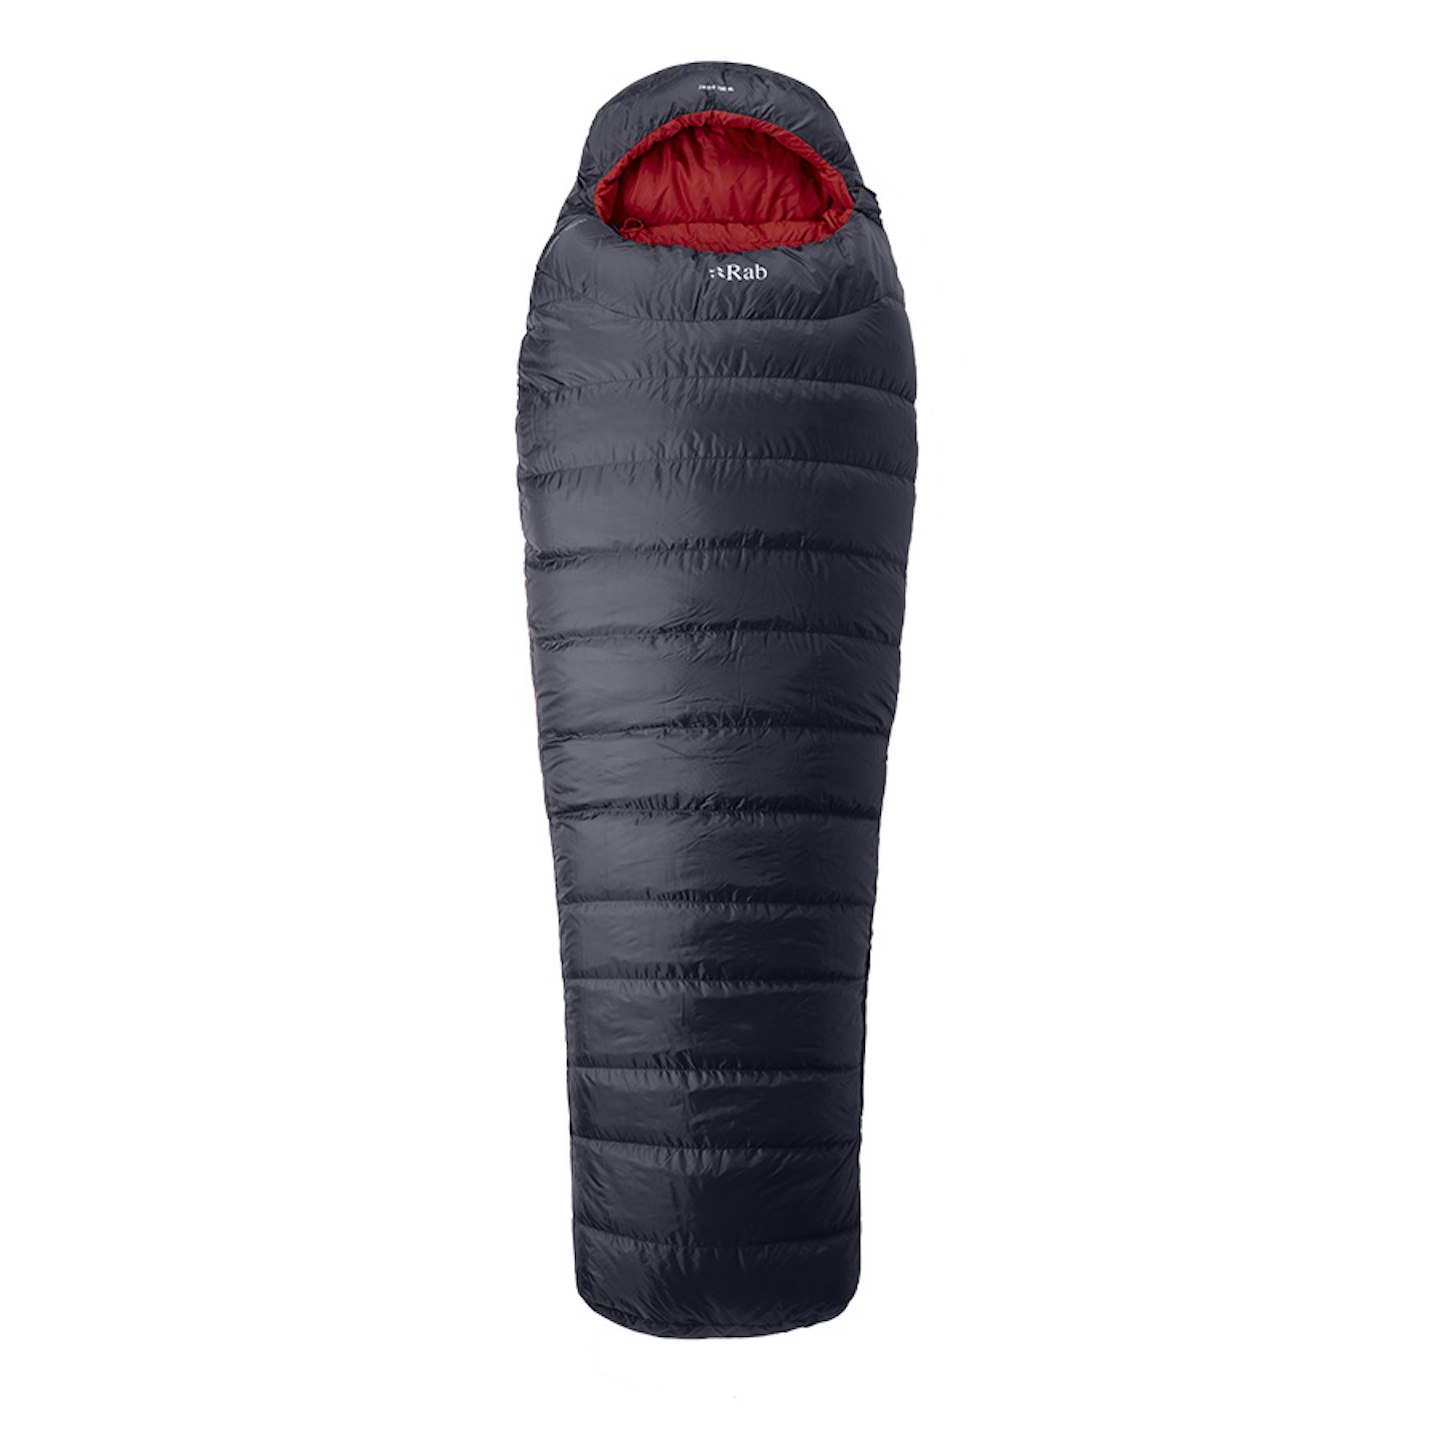 Rab Ascent 700 sleeping bag